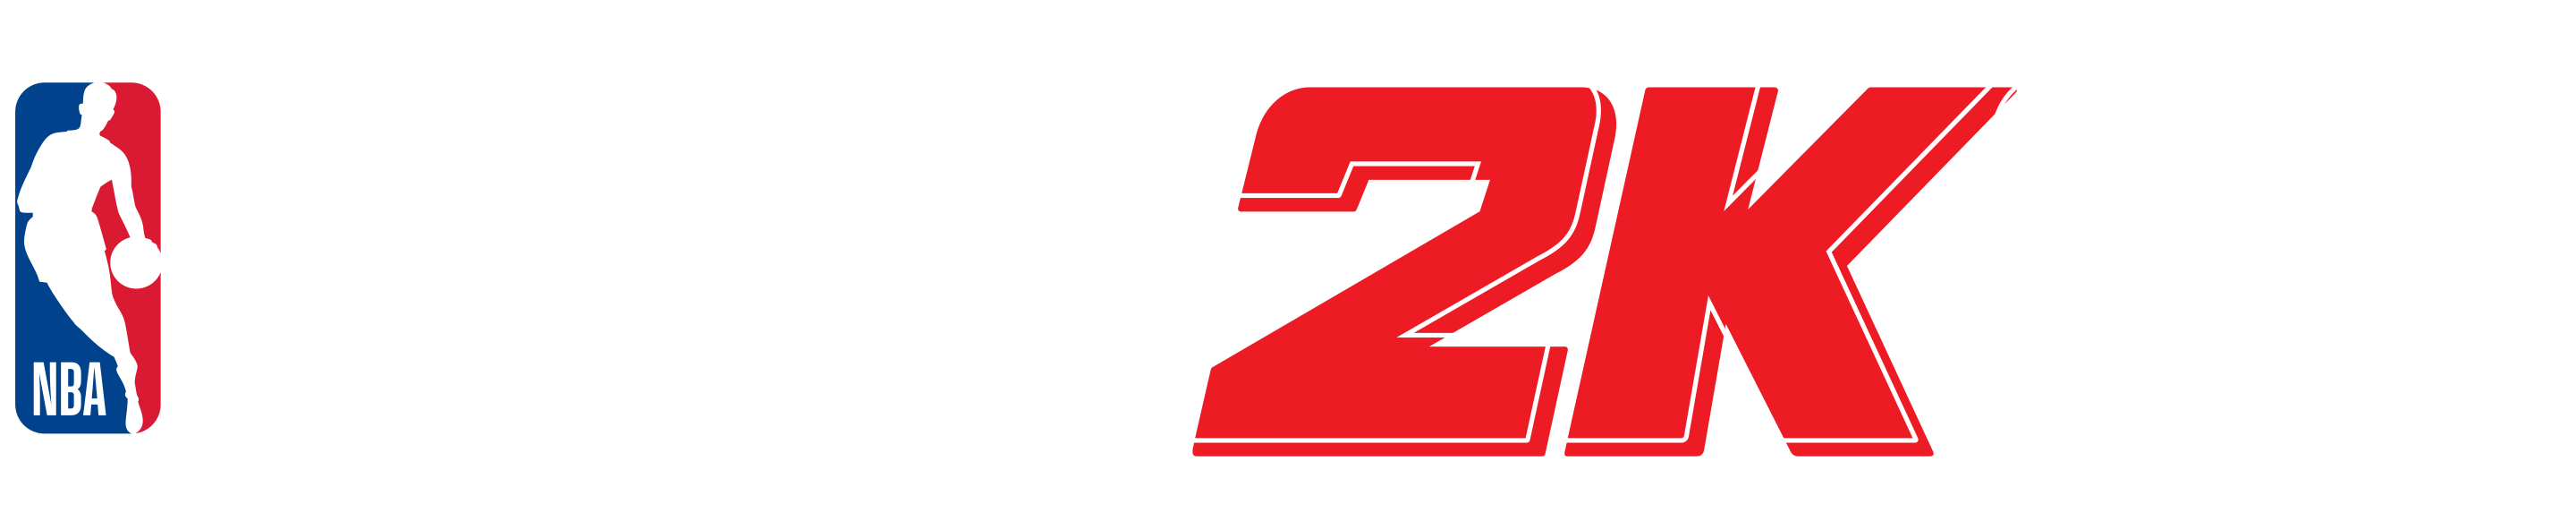 2k логотип. NBA 2k22 лого. NBA 22 логотип. Логотип а4.